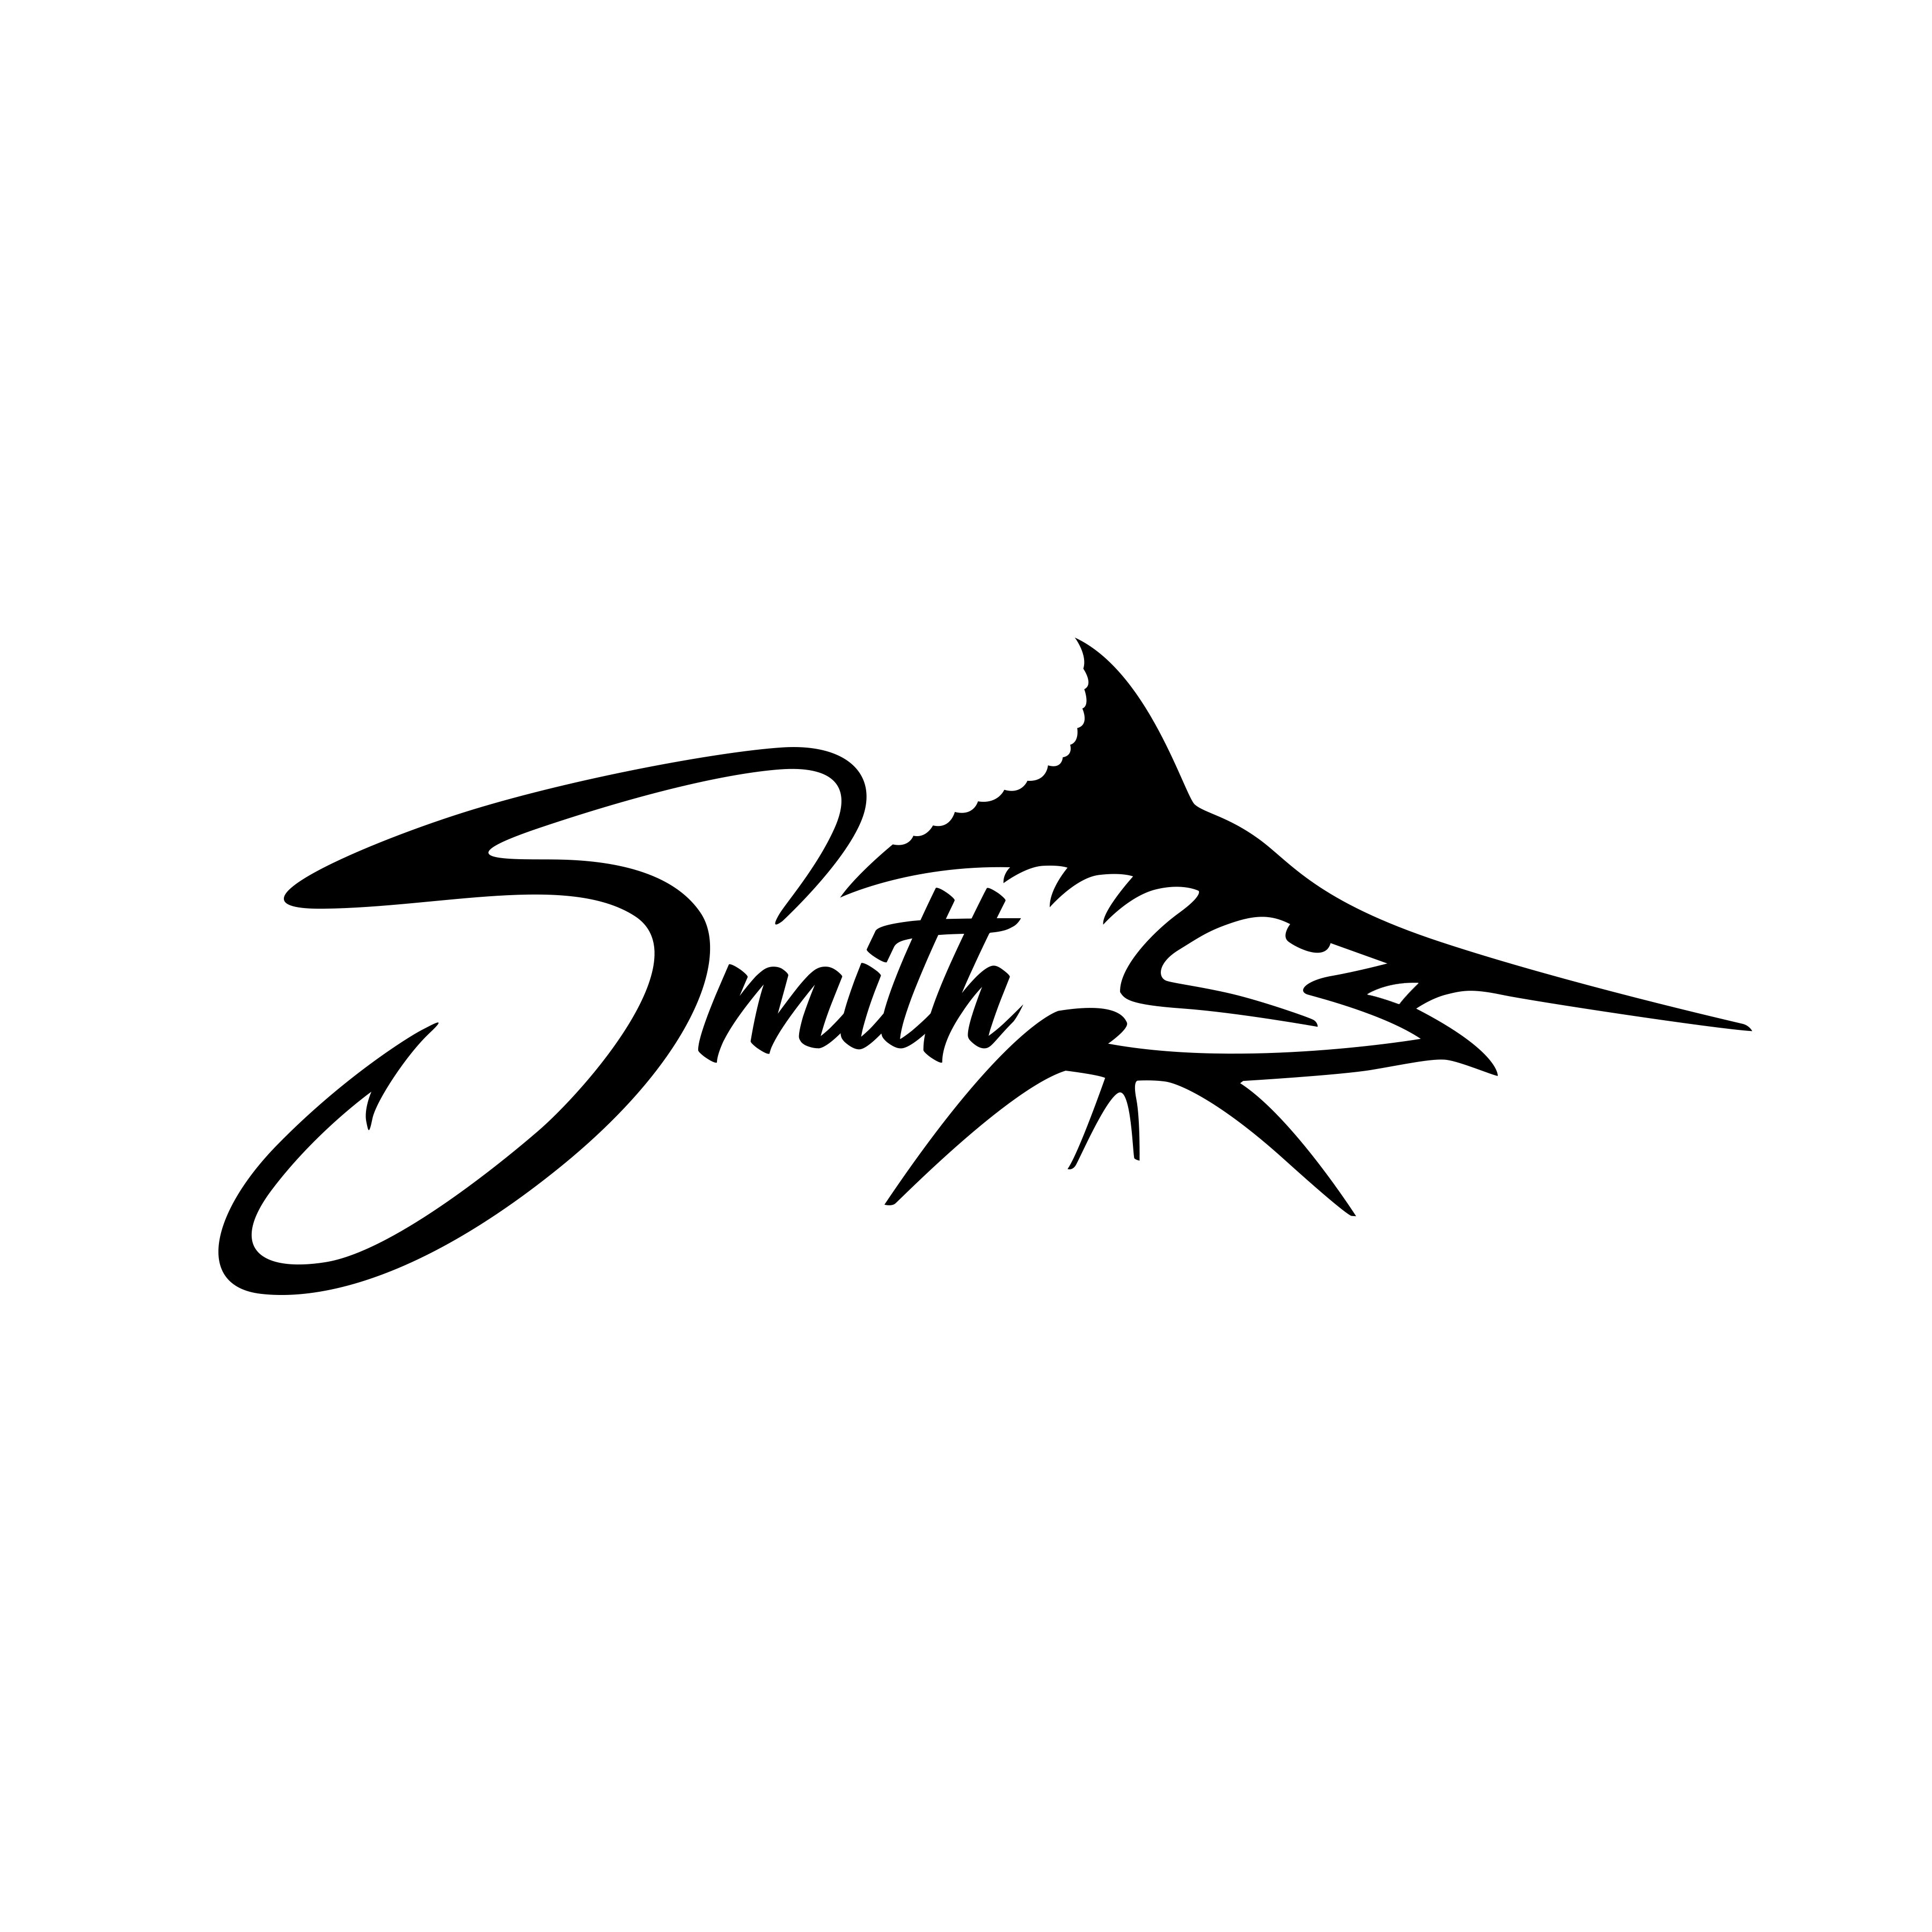 SMITH - Smith Custom Boats, LLC Trademark Registration